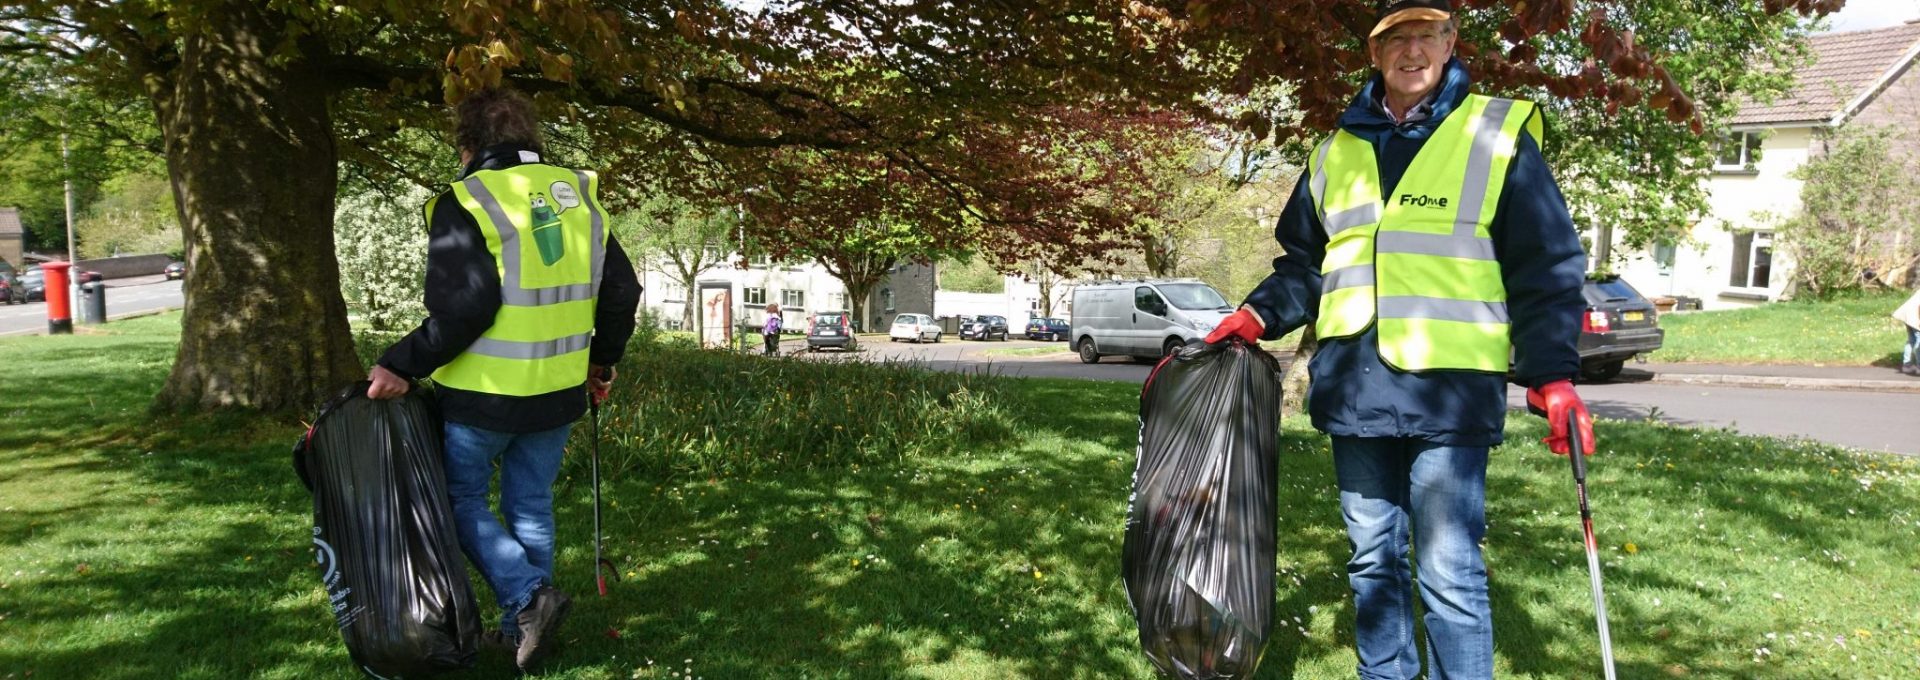 Man carrying bin bag and litter picker